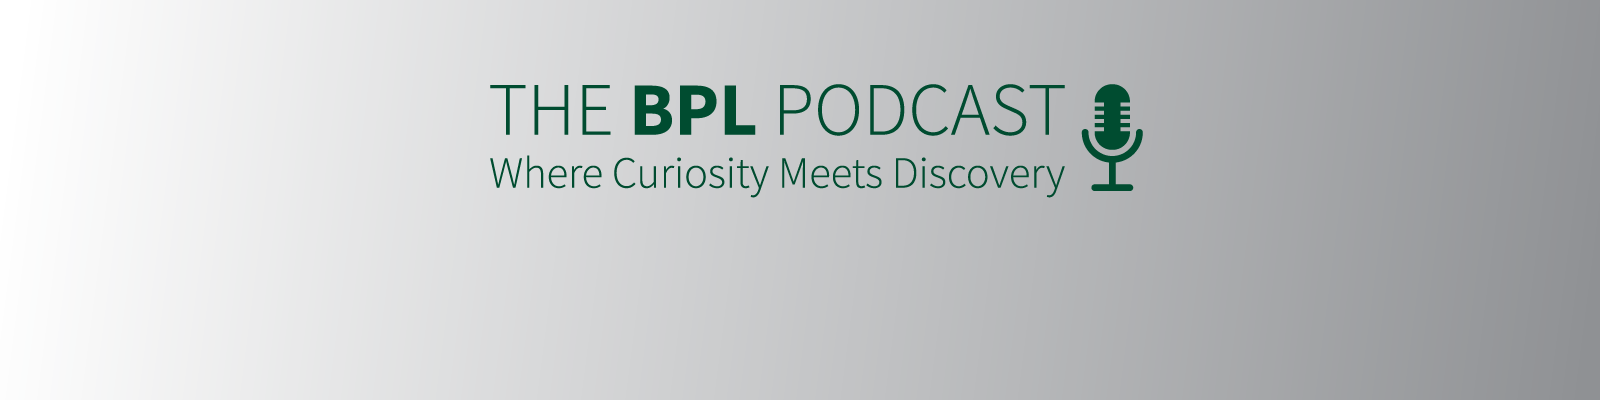 BPL Podcast